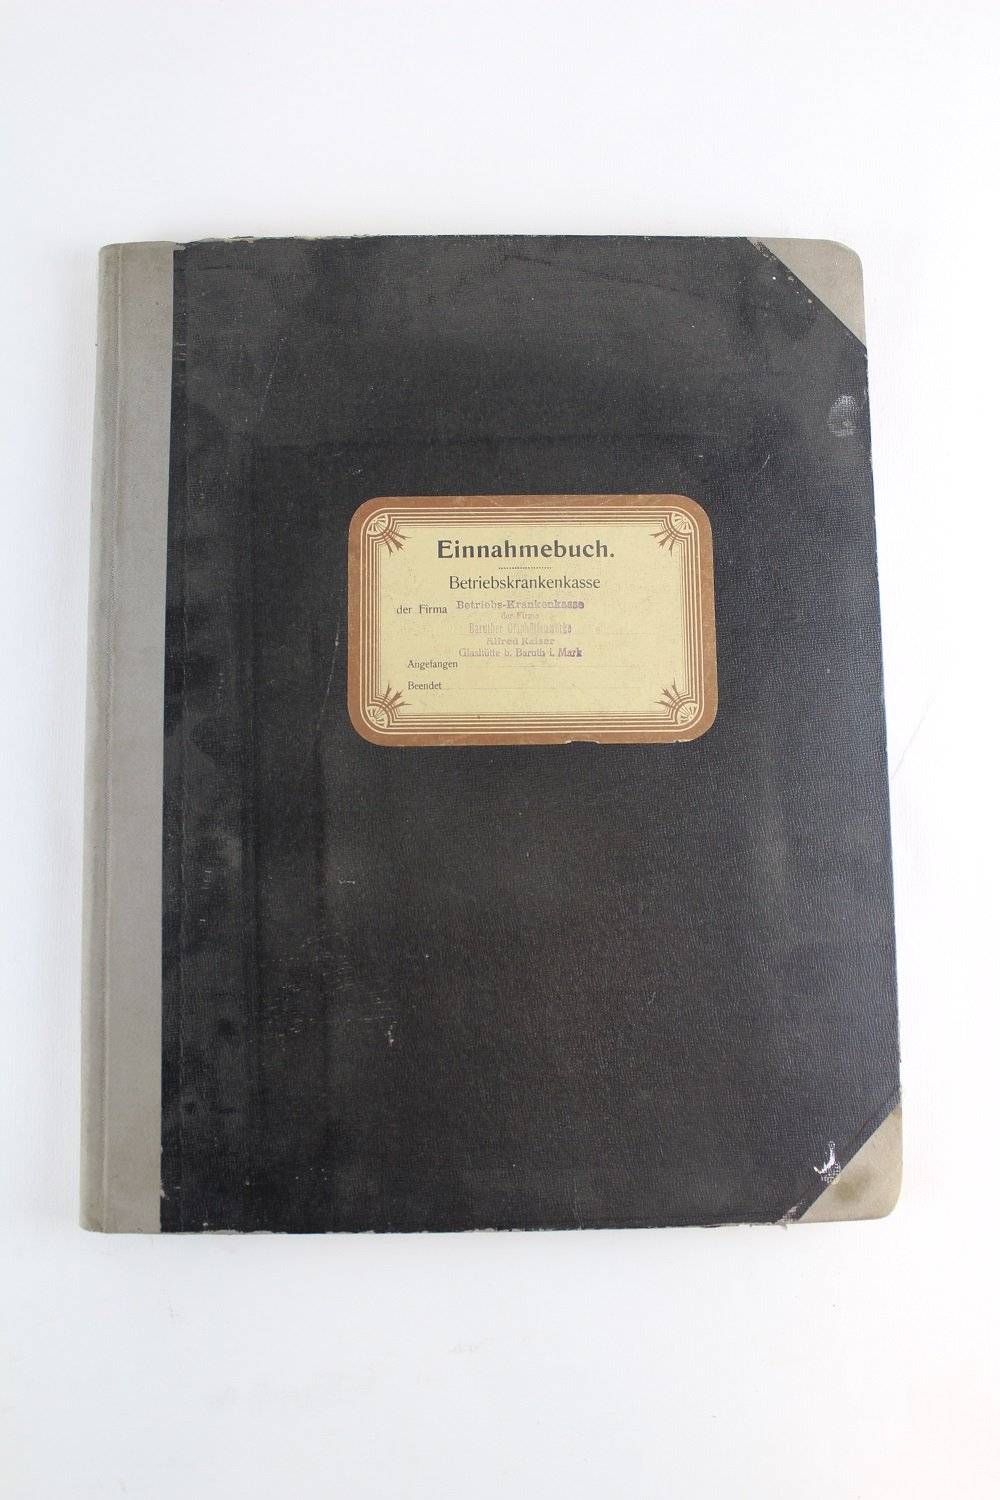 Einnahmebuch Betriebskrankenkasse (Museum Baruther Glashütte CC BY-NC-SA)